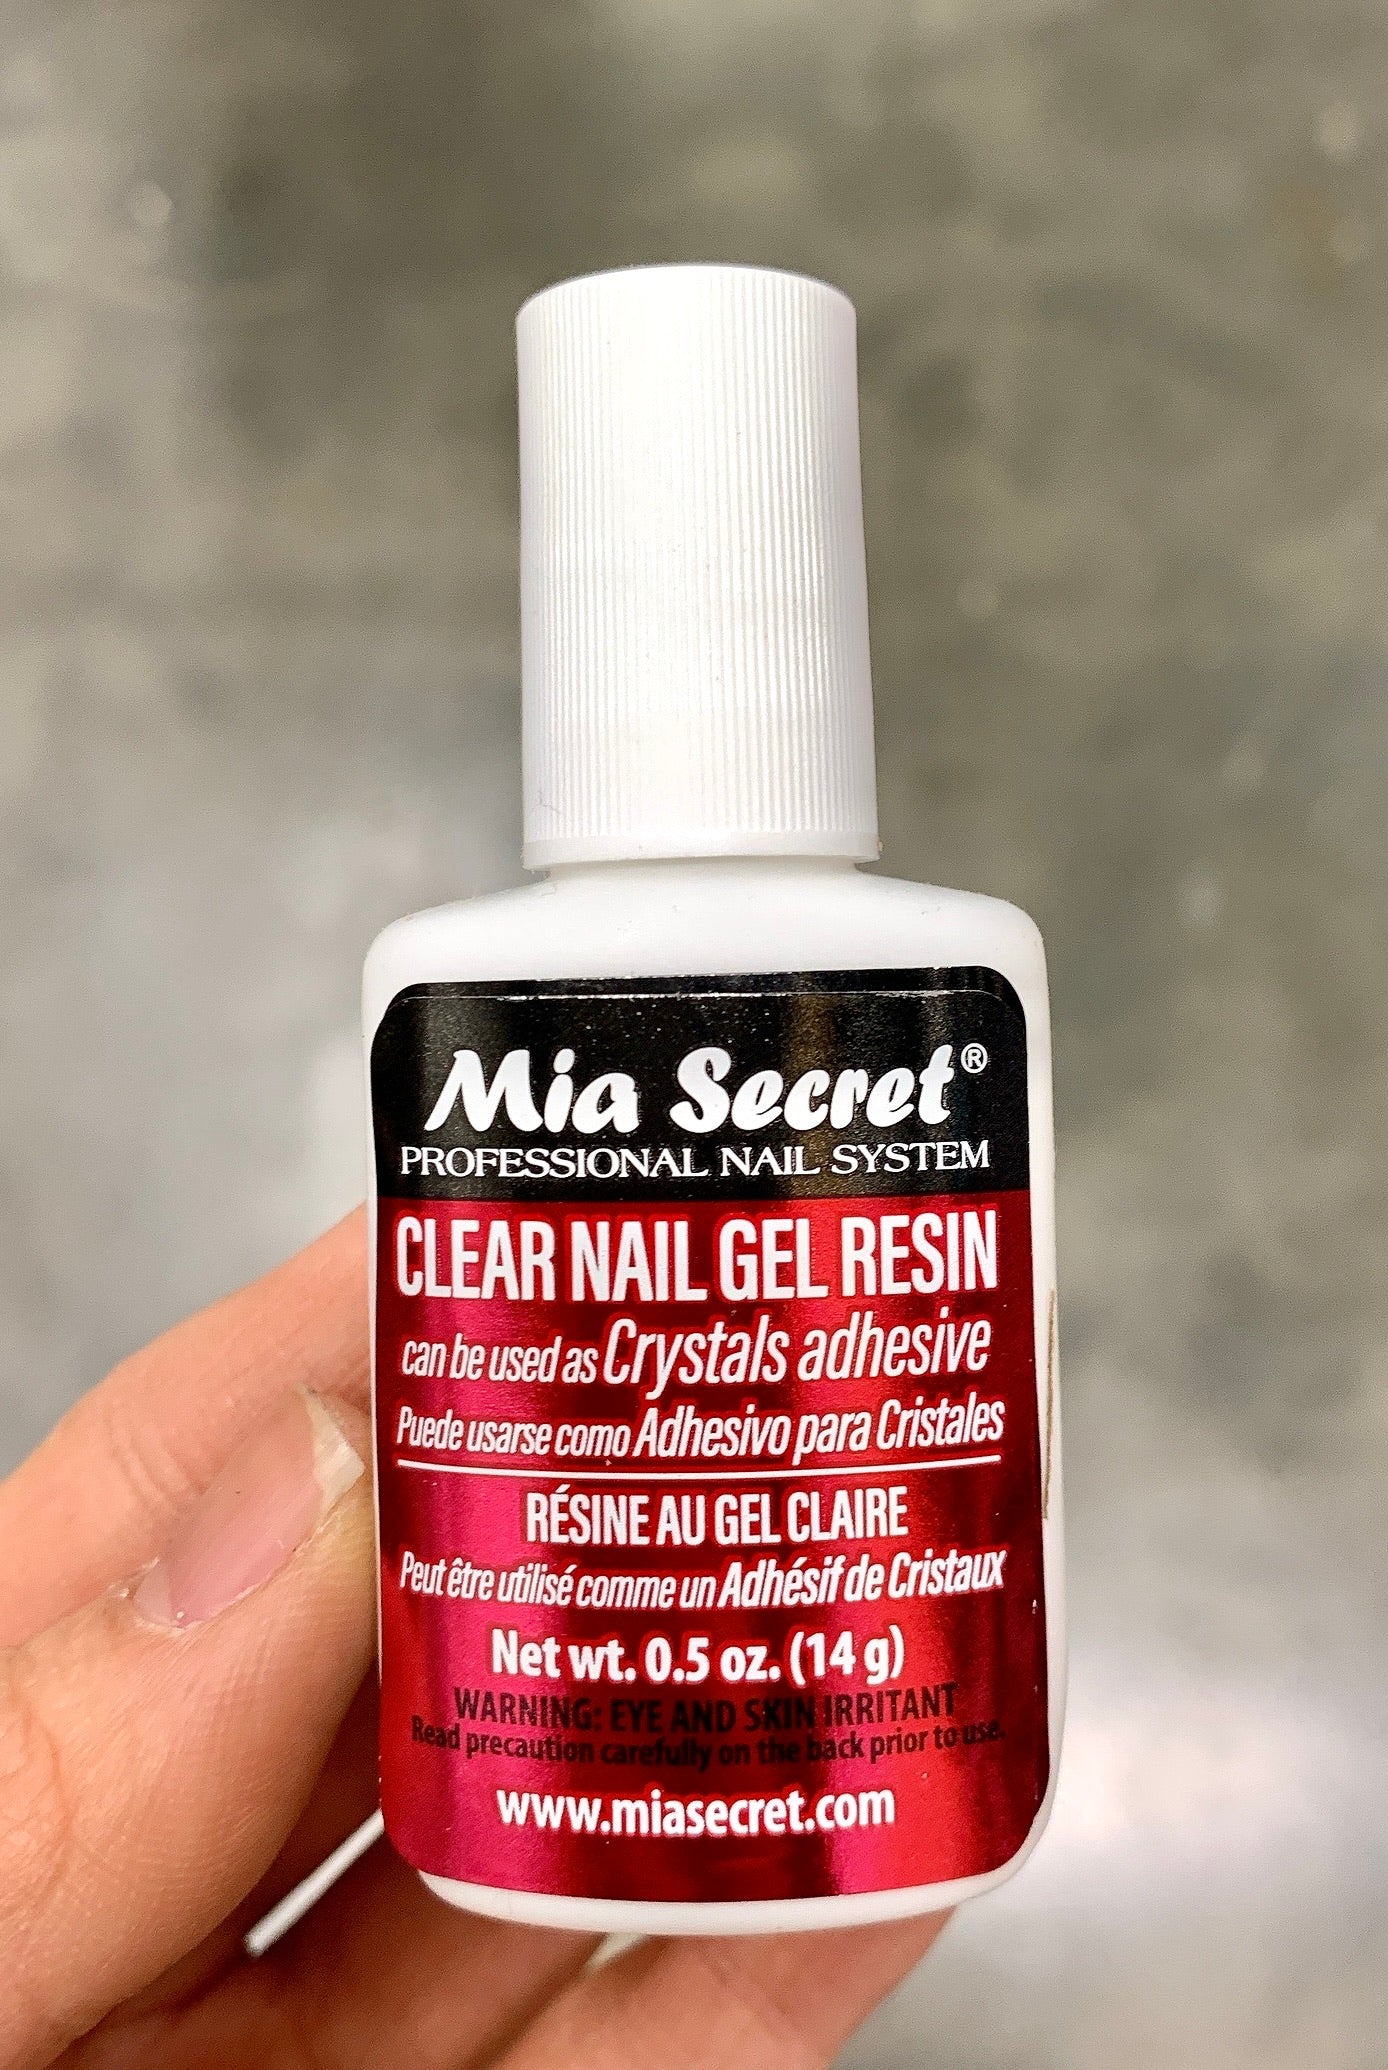 Mia Secret 3 pack (½ oz.) Brush On Clear Nail Gel Resin - Glues crystals